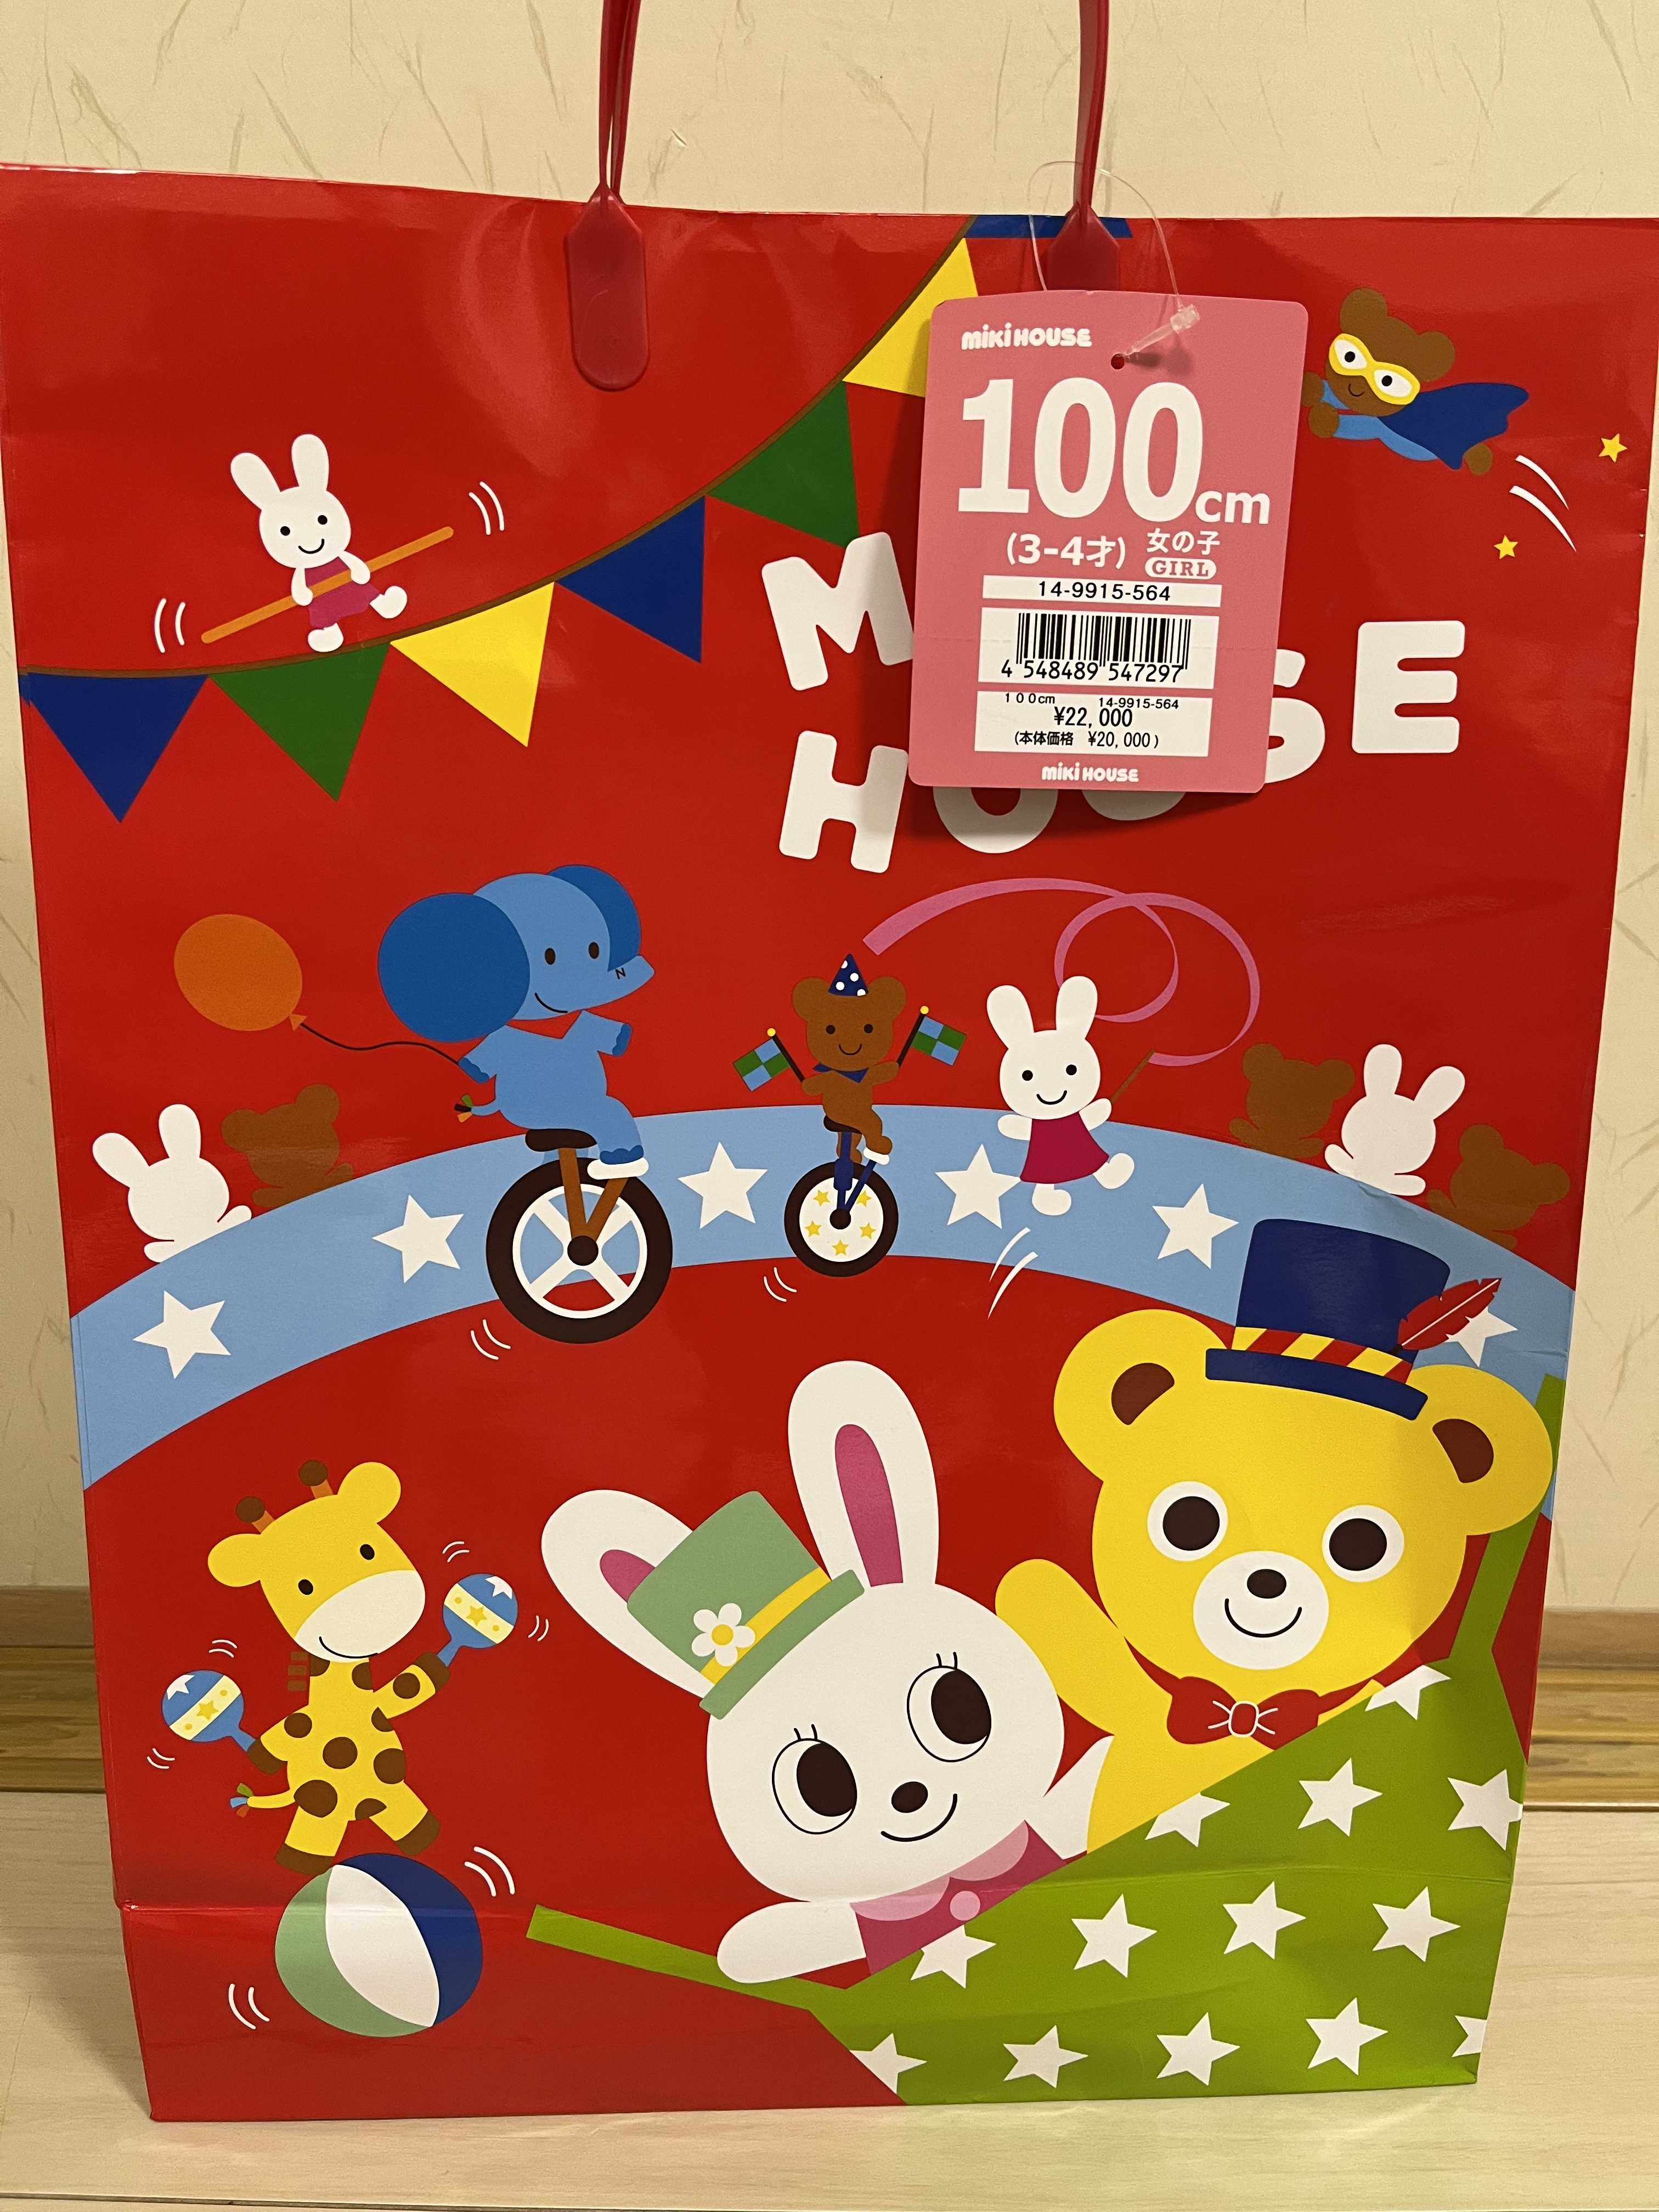 MIKI HOUSE福袋100 | mdh.com.sa